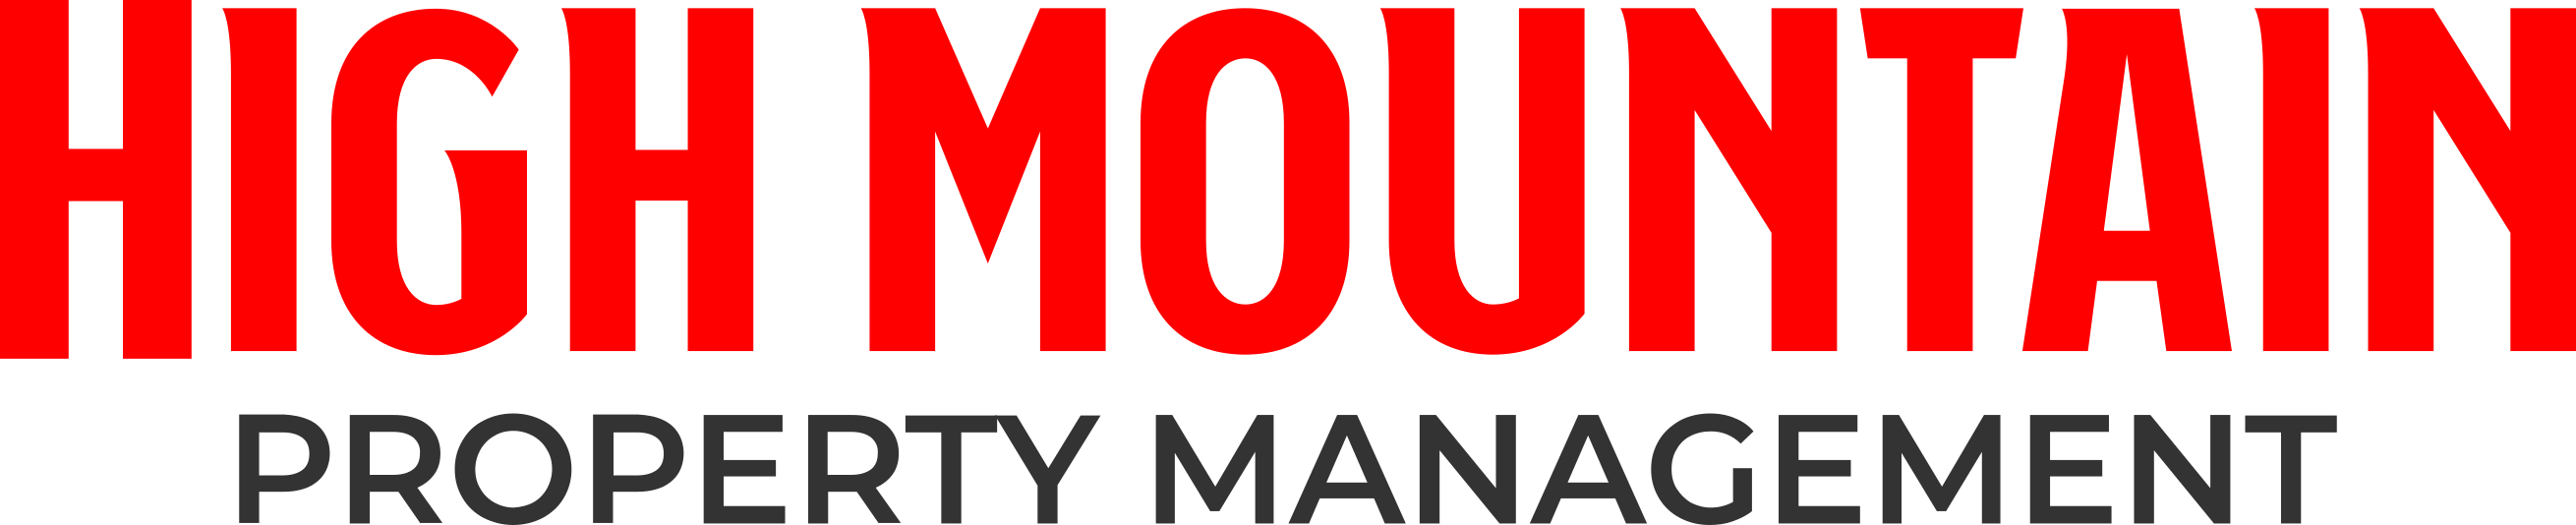 High Mountain Property Management logo